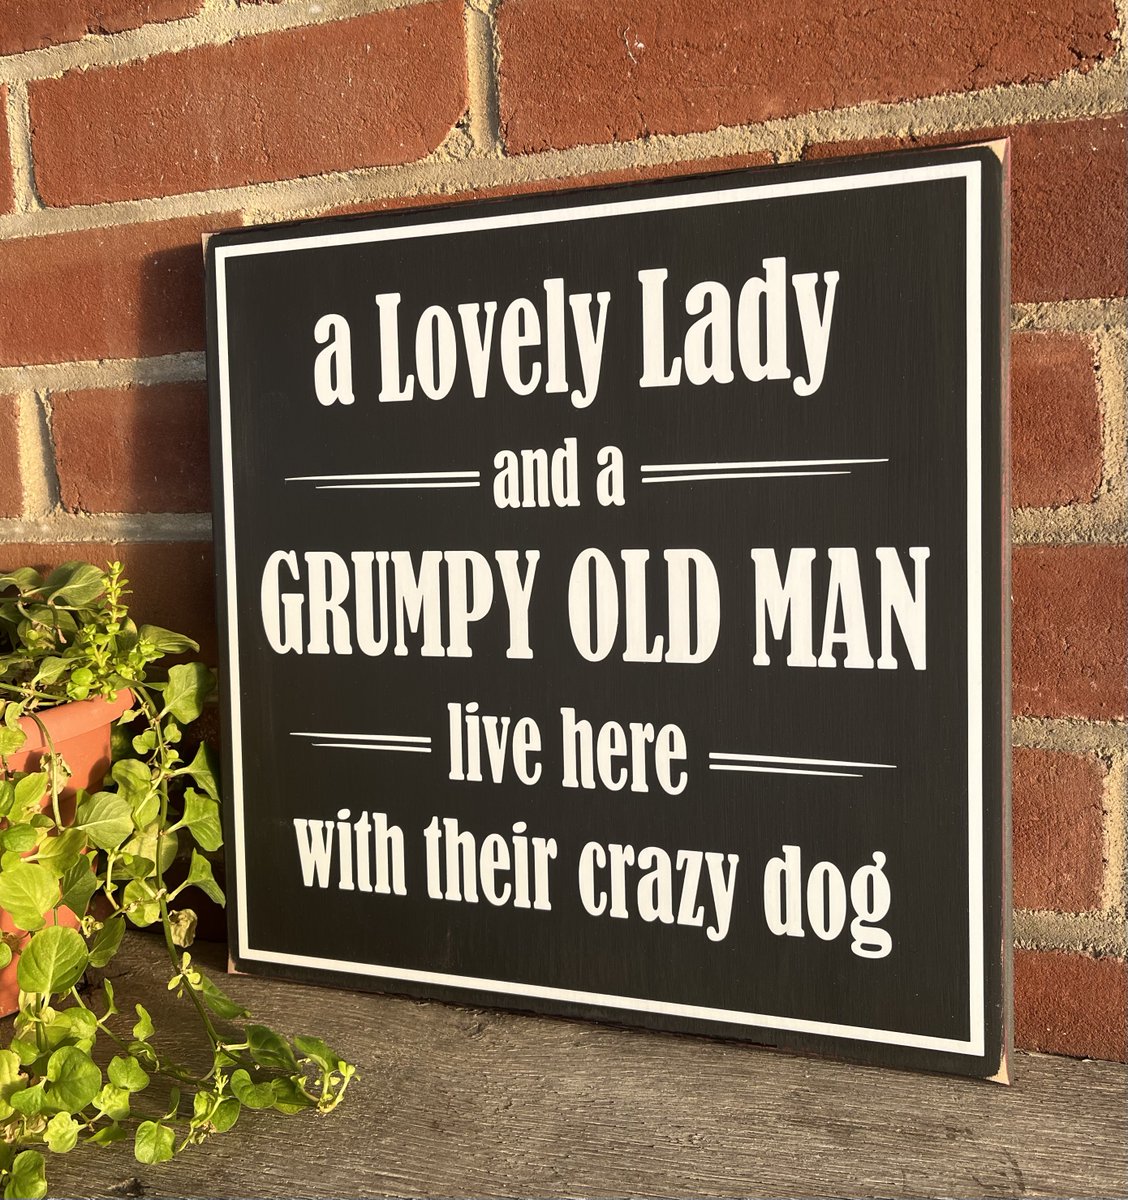 Lovely Lady, Grumpy Old Man, Crazy Dog Live here #welcomesign #SMILEtt23 #crazydog countryworkshop.net/products/lovel…